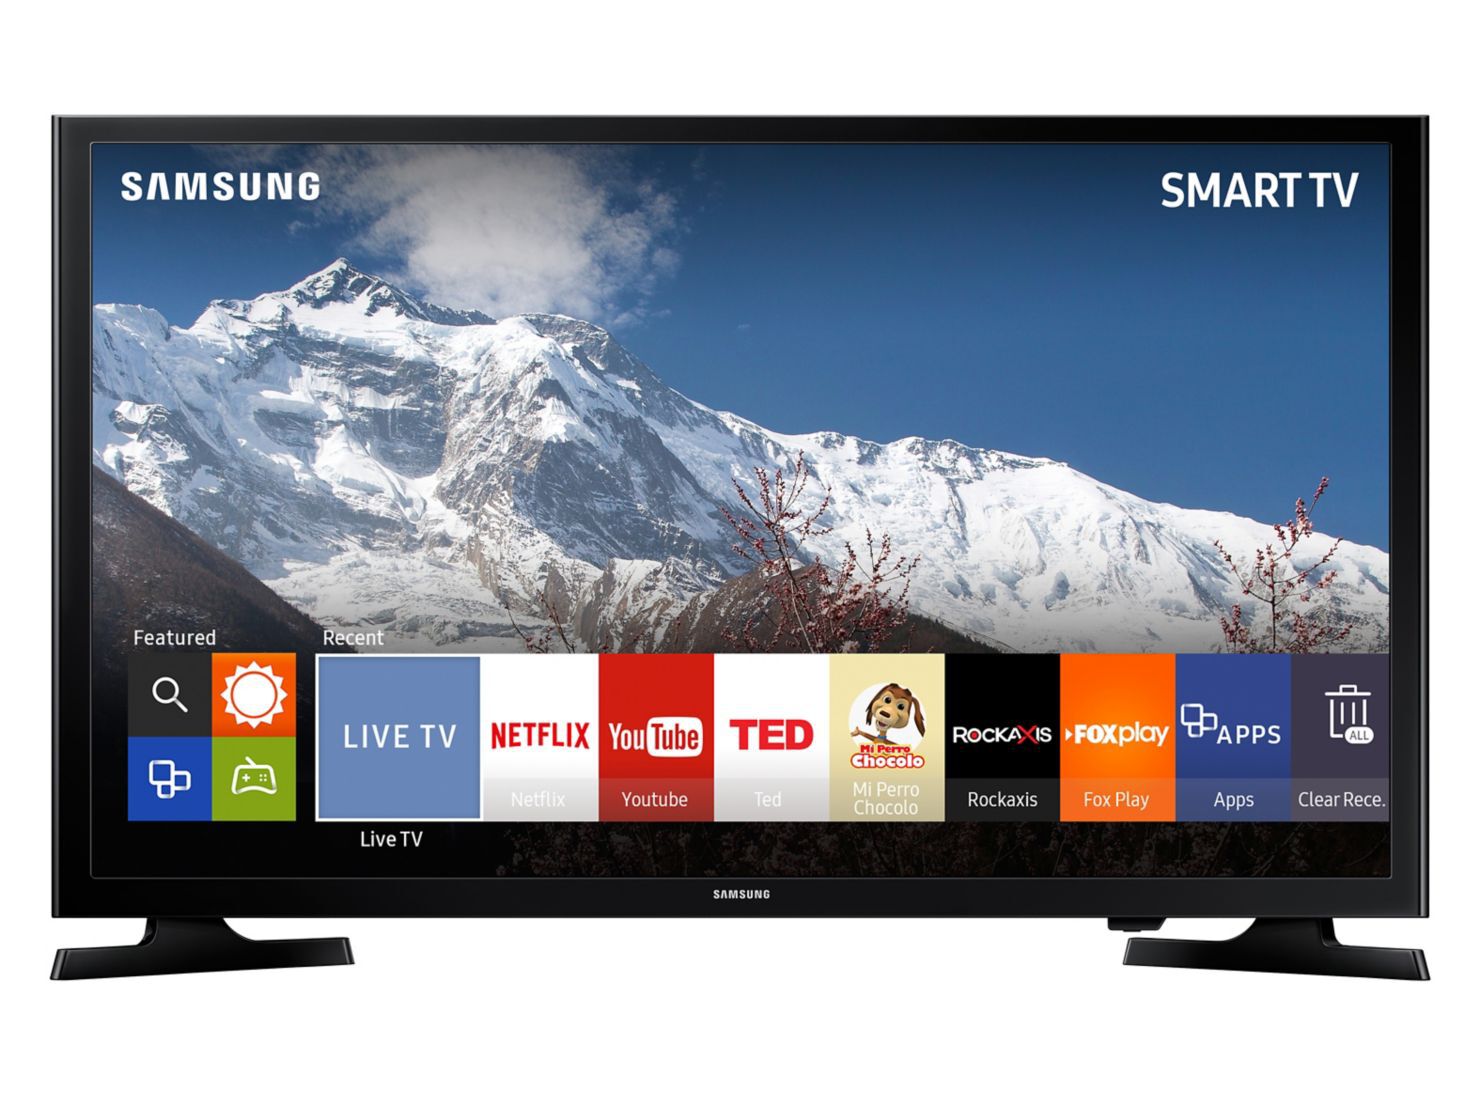 Samsung Smart TV 32. Самсунг лед 40 смарт ТВ. Samsung Smart TV 43. Телевизор самсунг 32 дюйма смарт ТВ. Телевизор 40 дюймов без смарт